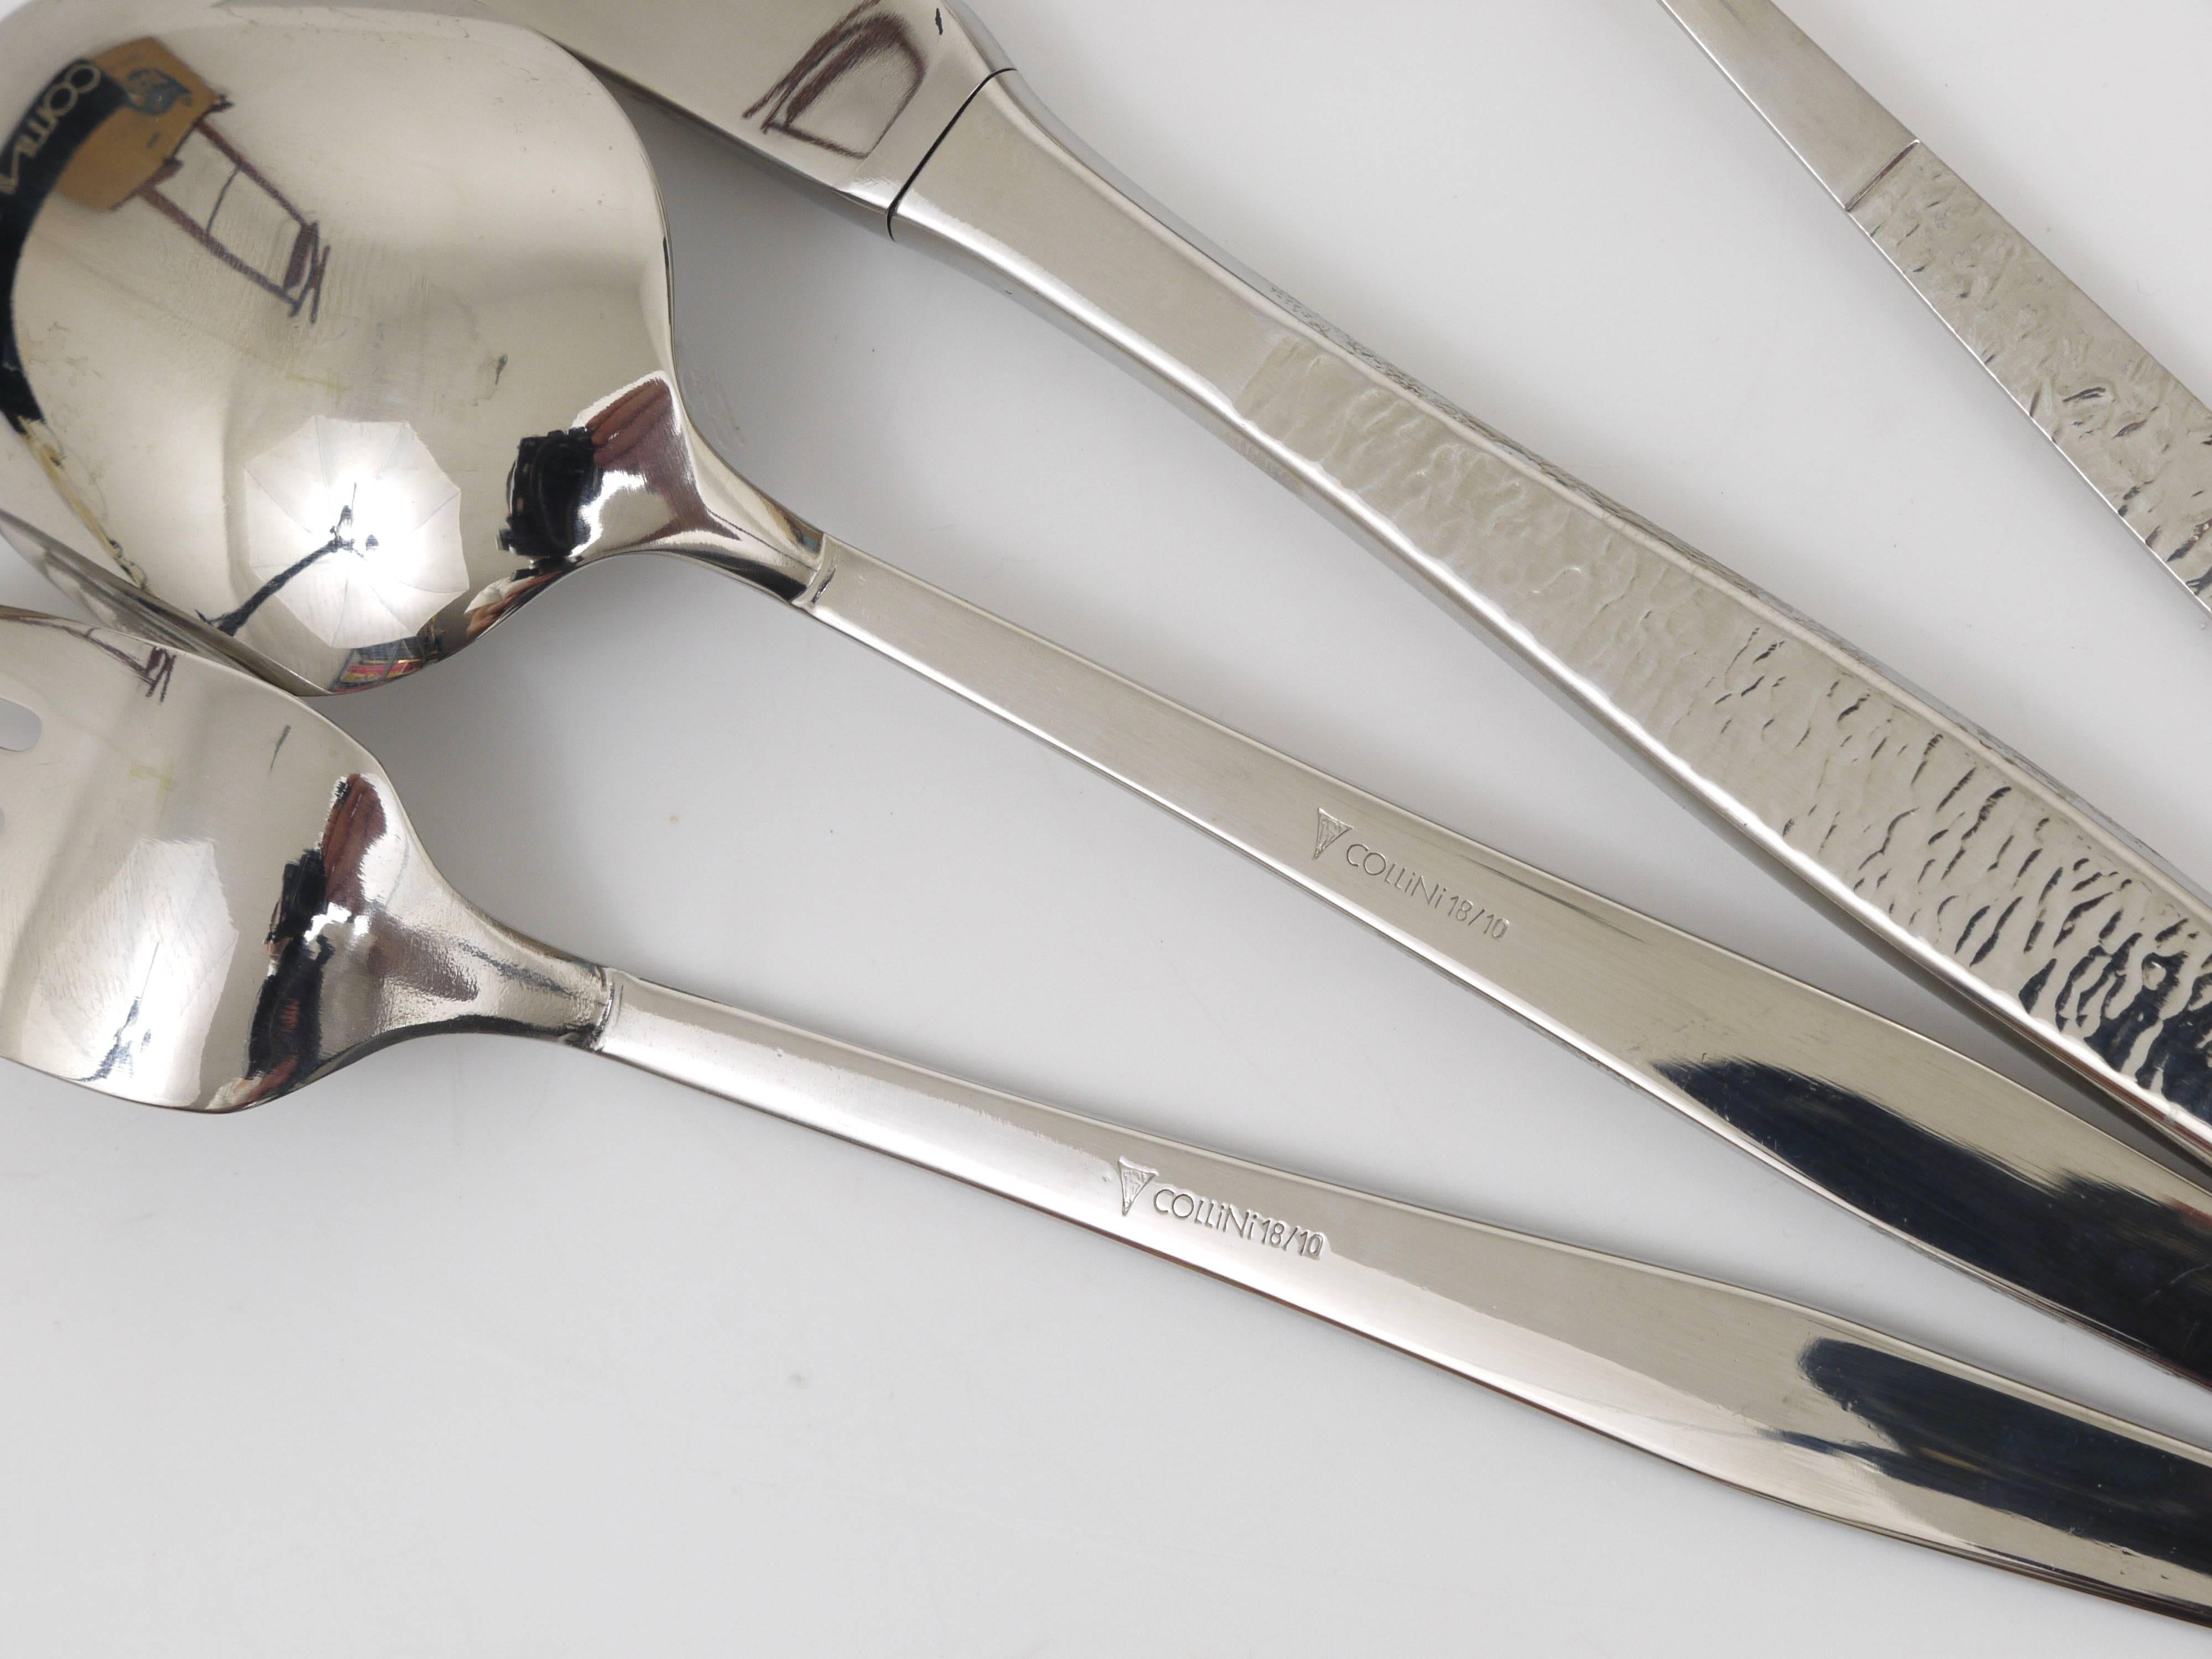 Stainless Steel Austrian Modernist Flatware Cutlery by Collini Austria, 1960s